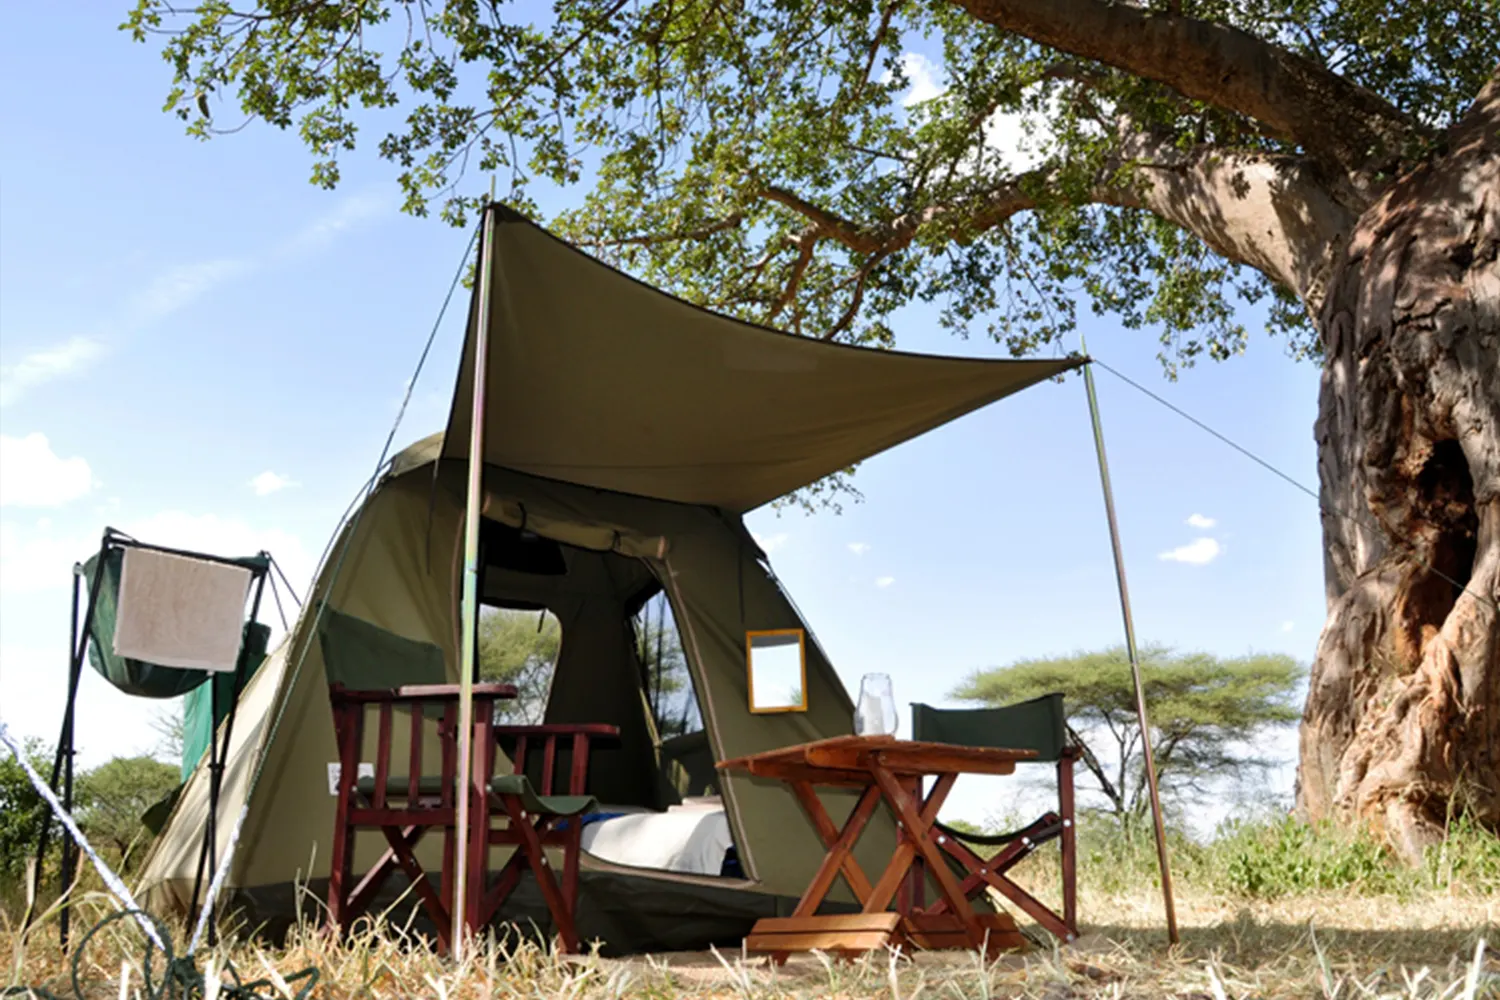 3 Days Serengeti Budget Safari